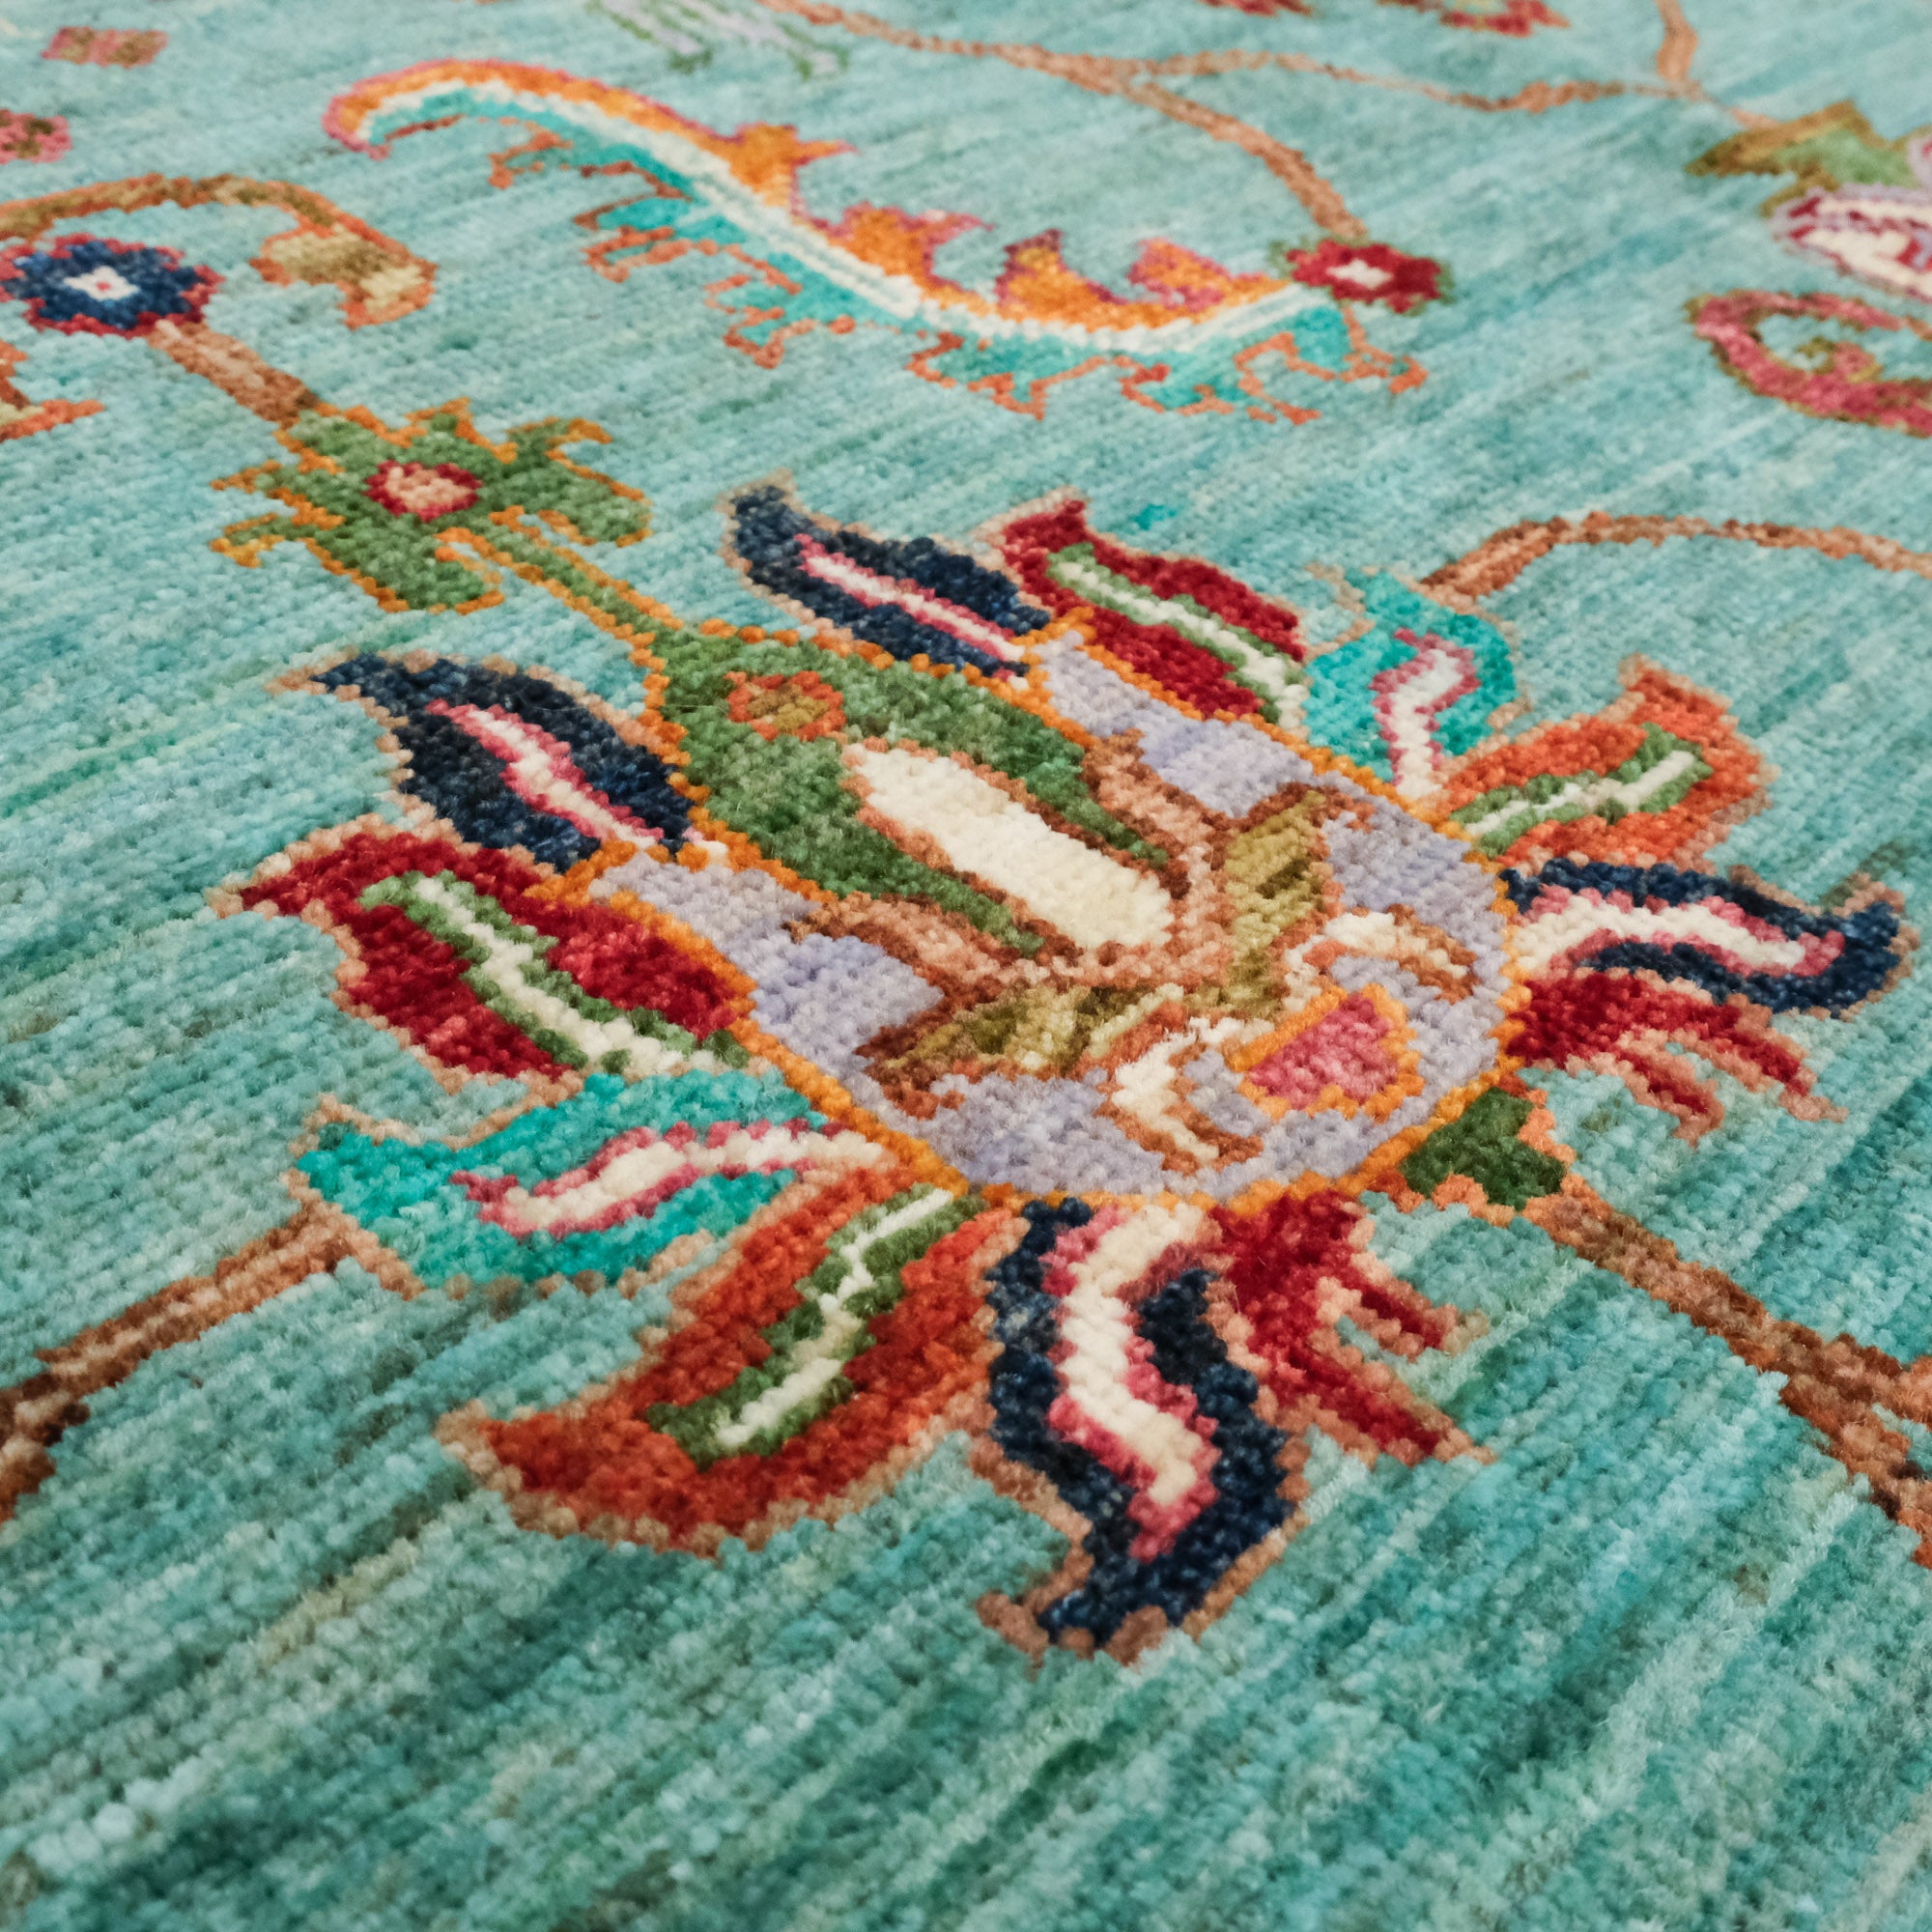 Şahzade Series Hand-Woven Uşak Patterned Blue Carpet